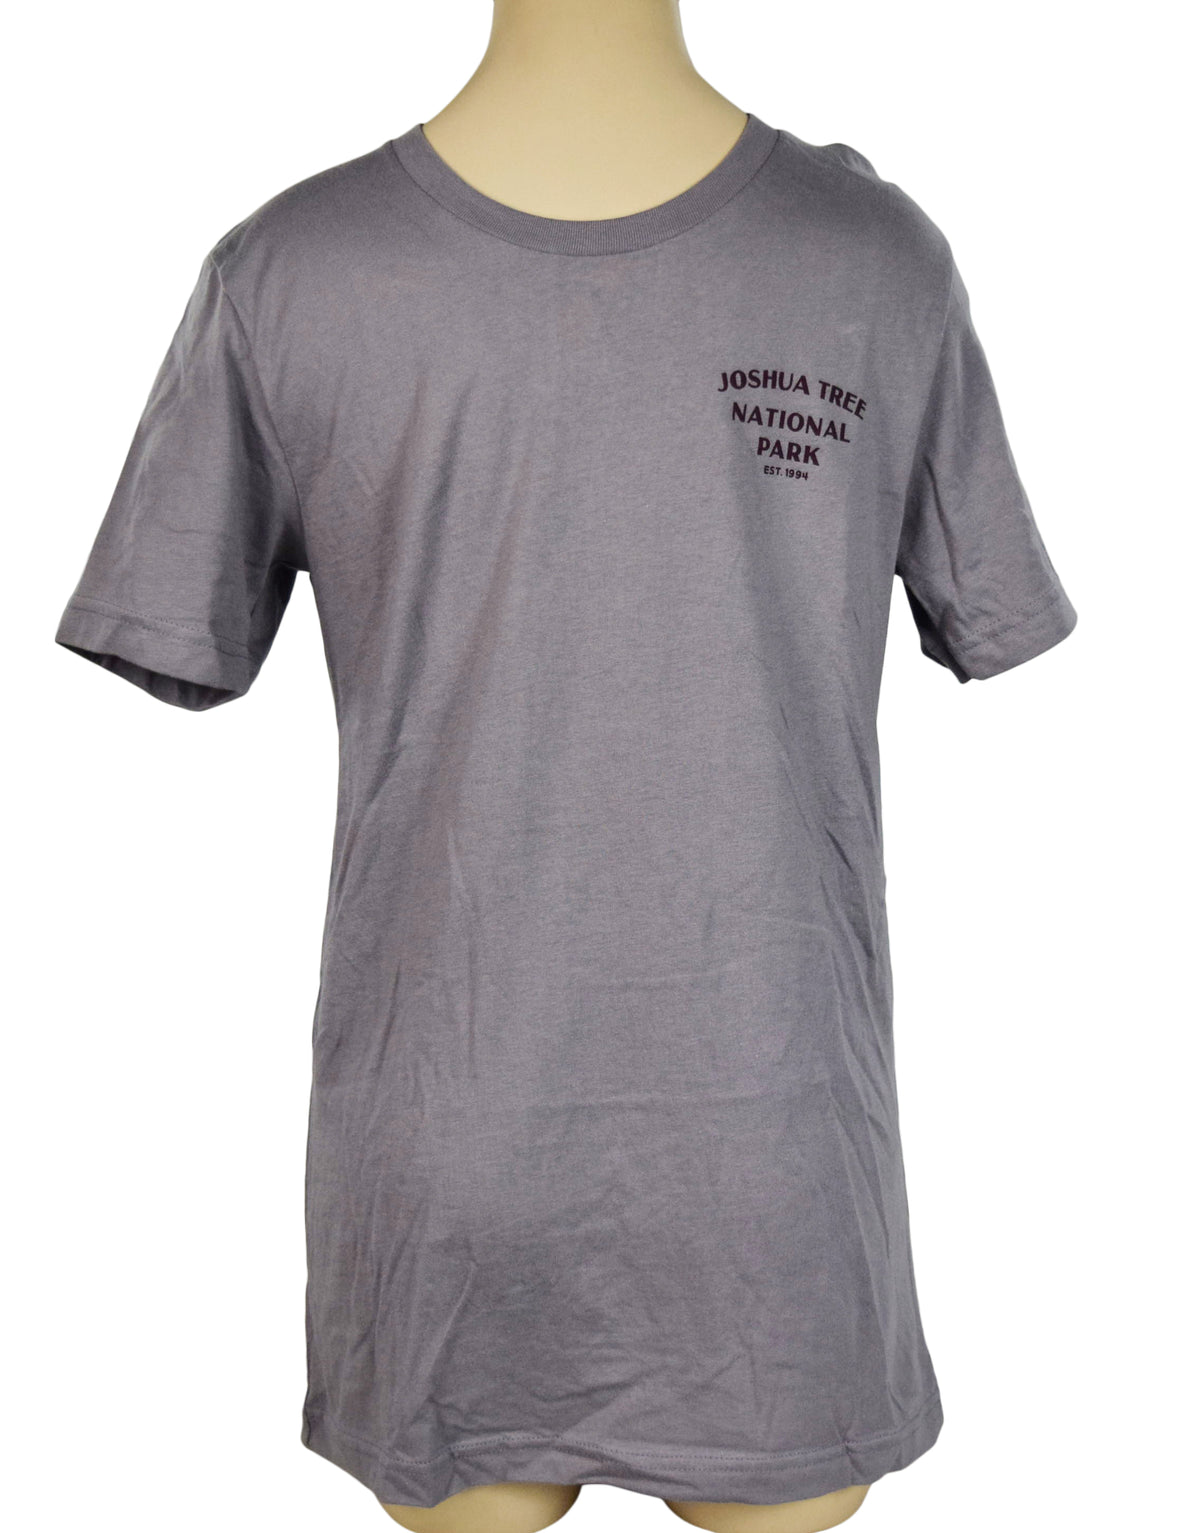 Sendero Provisions Co. Joshua Tree National Park "Storm" T-Shirt (L)